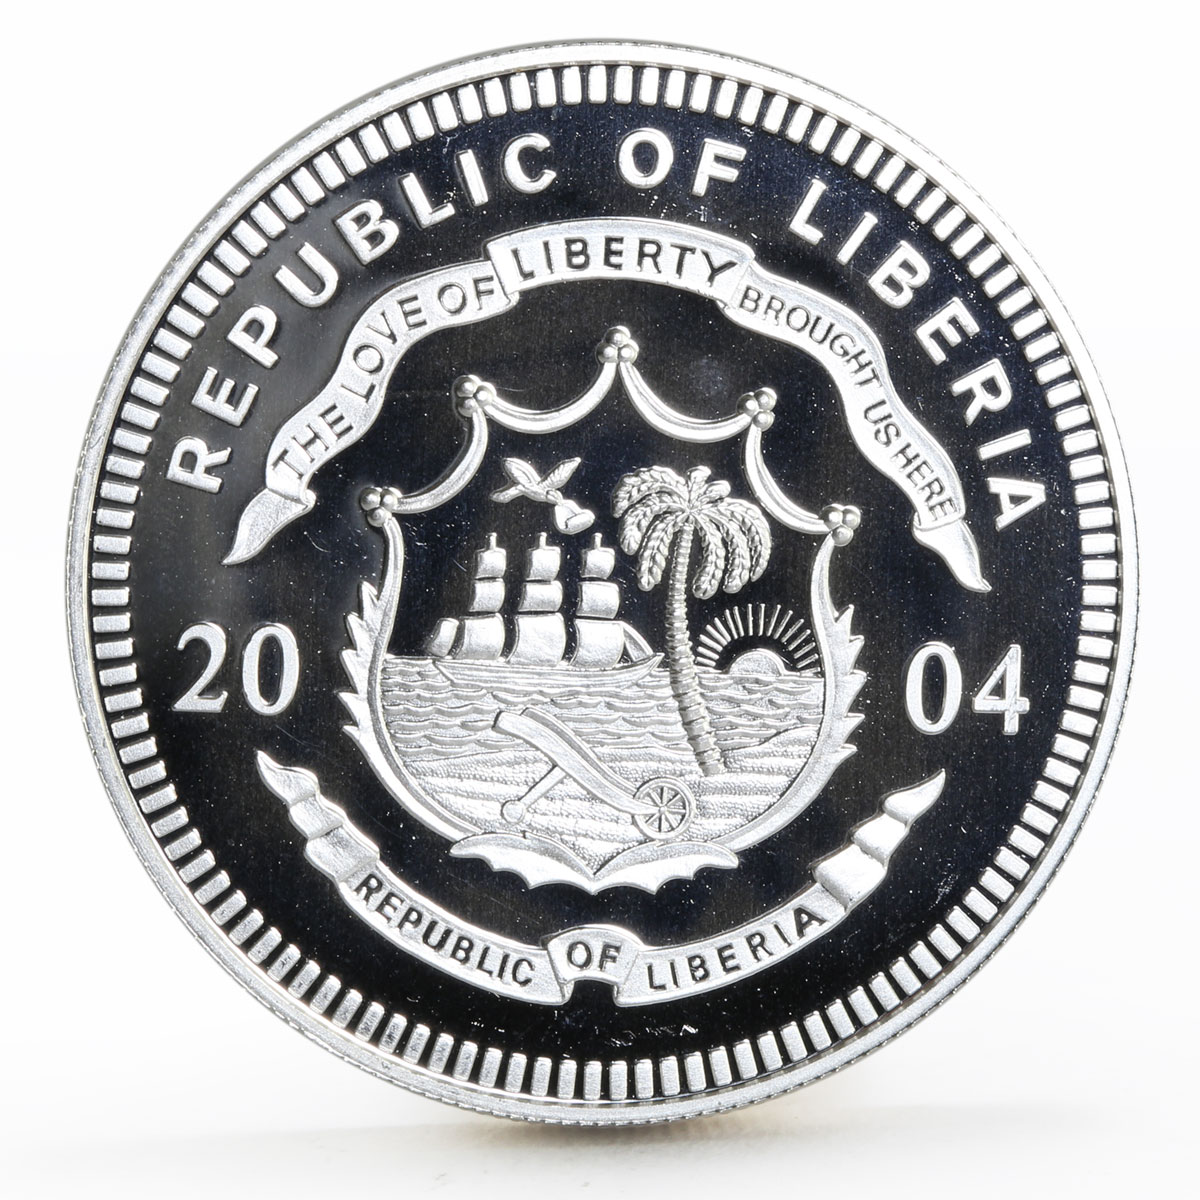 Liberia 20 dollars Athens Olympic Games series Taekwondo proof silver coin 2004